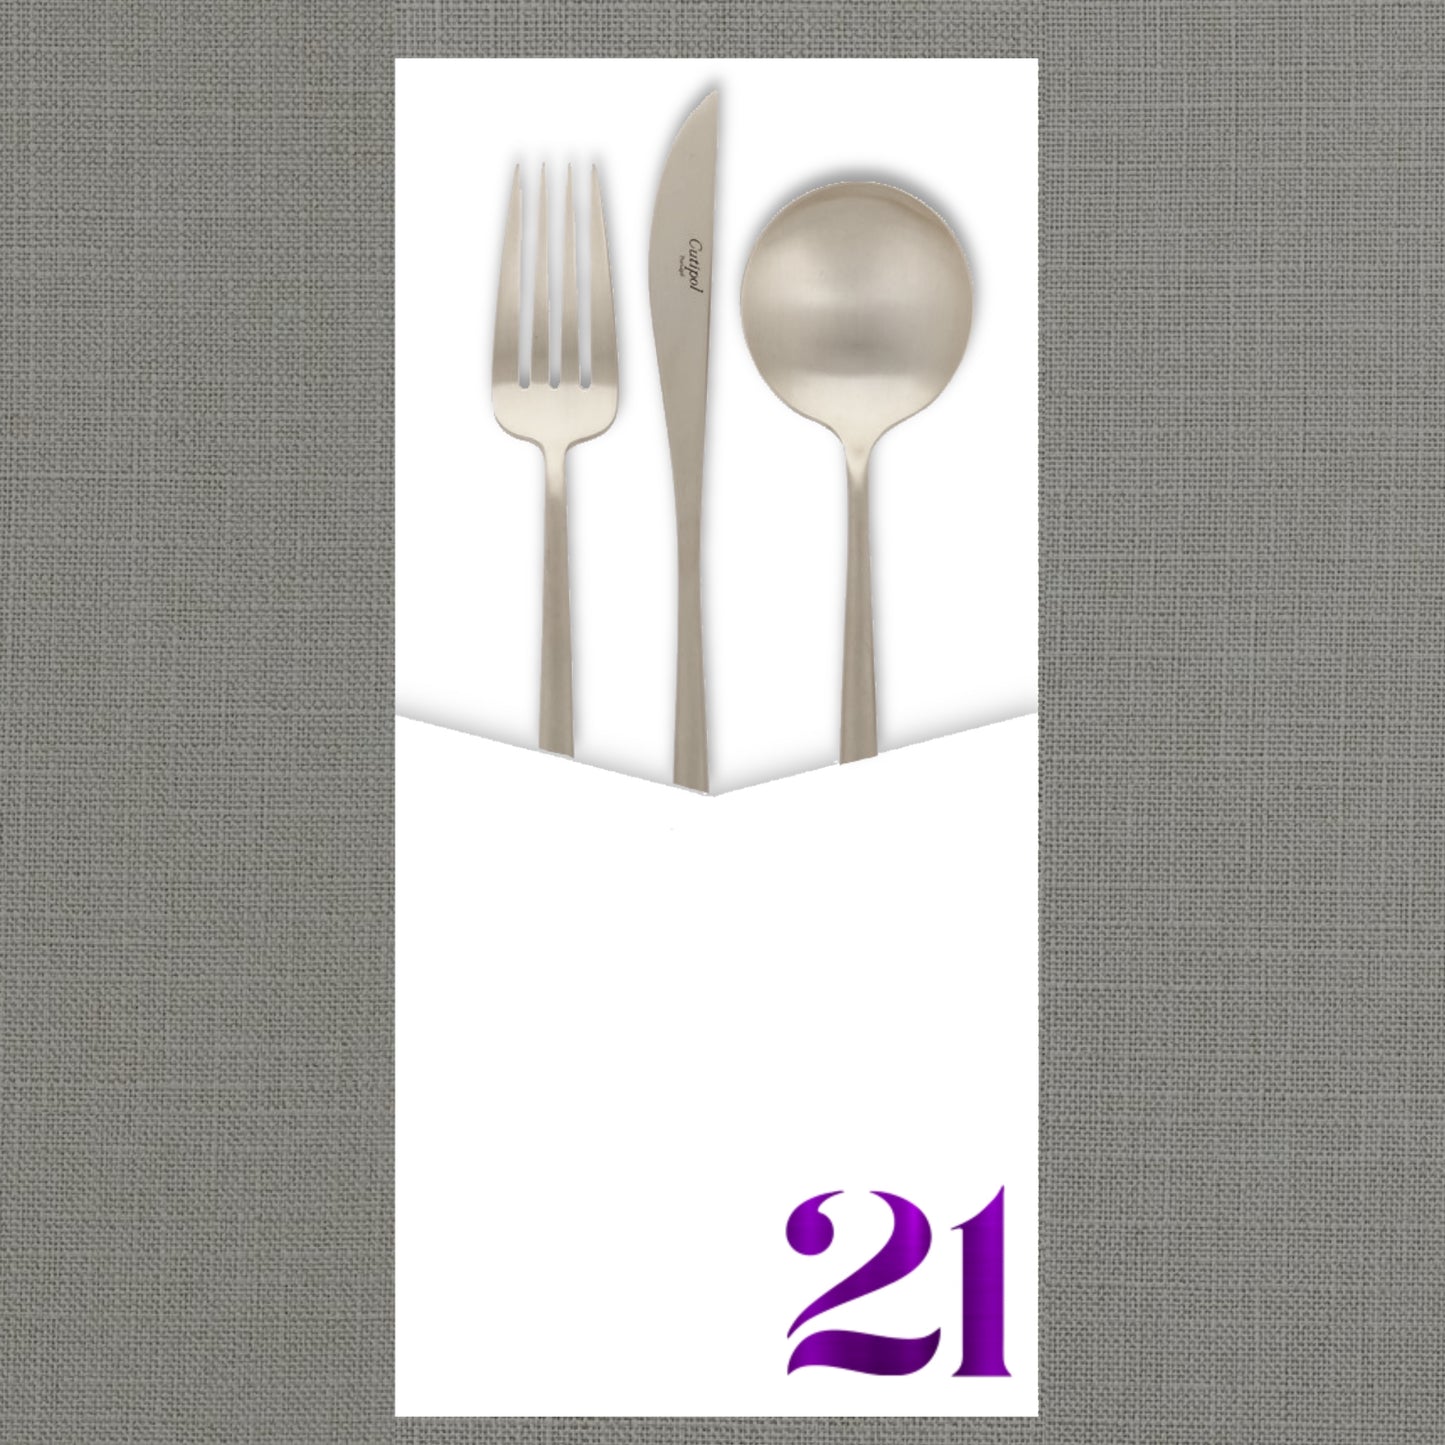 Foil Celebrate! 21 - Cutlery Pouch